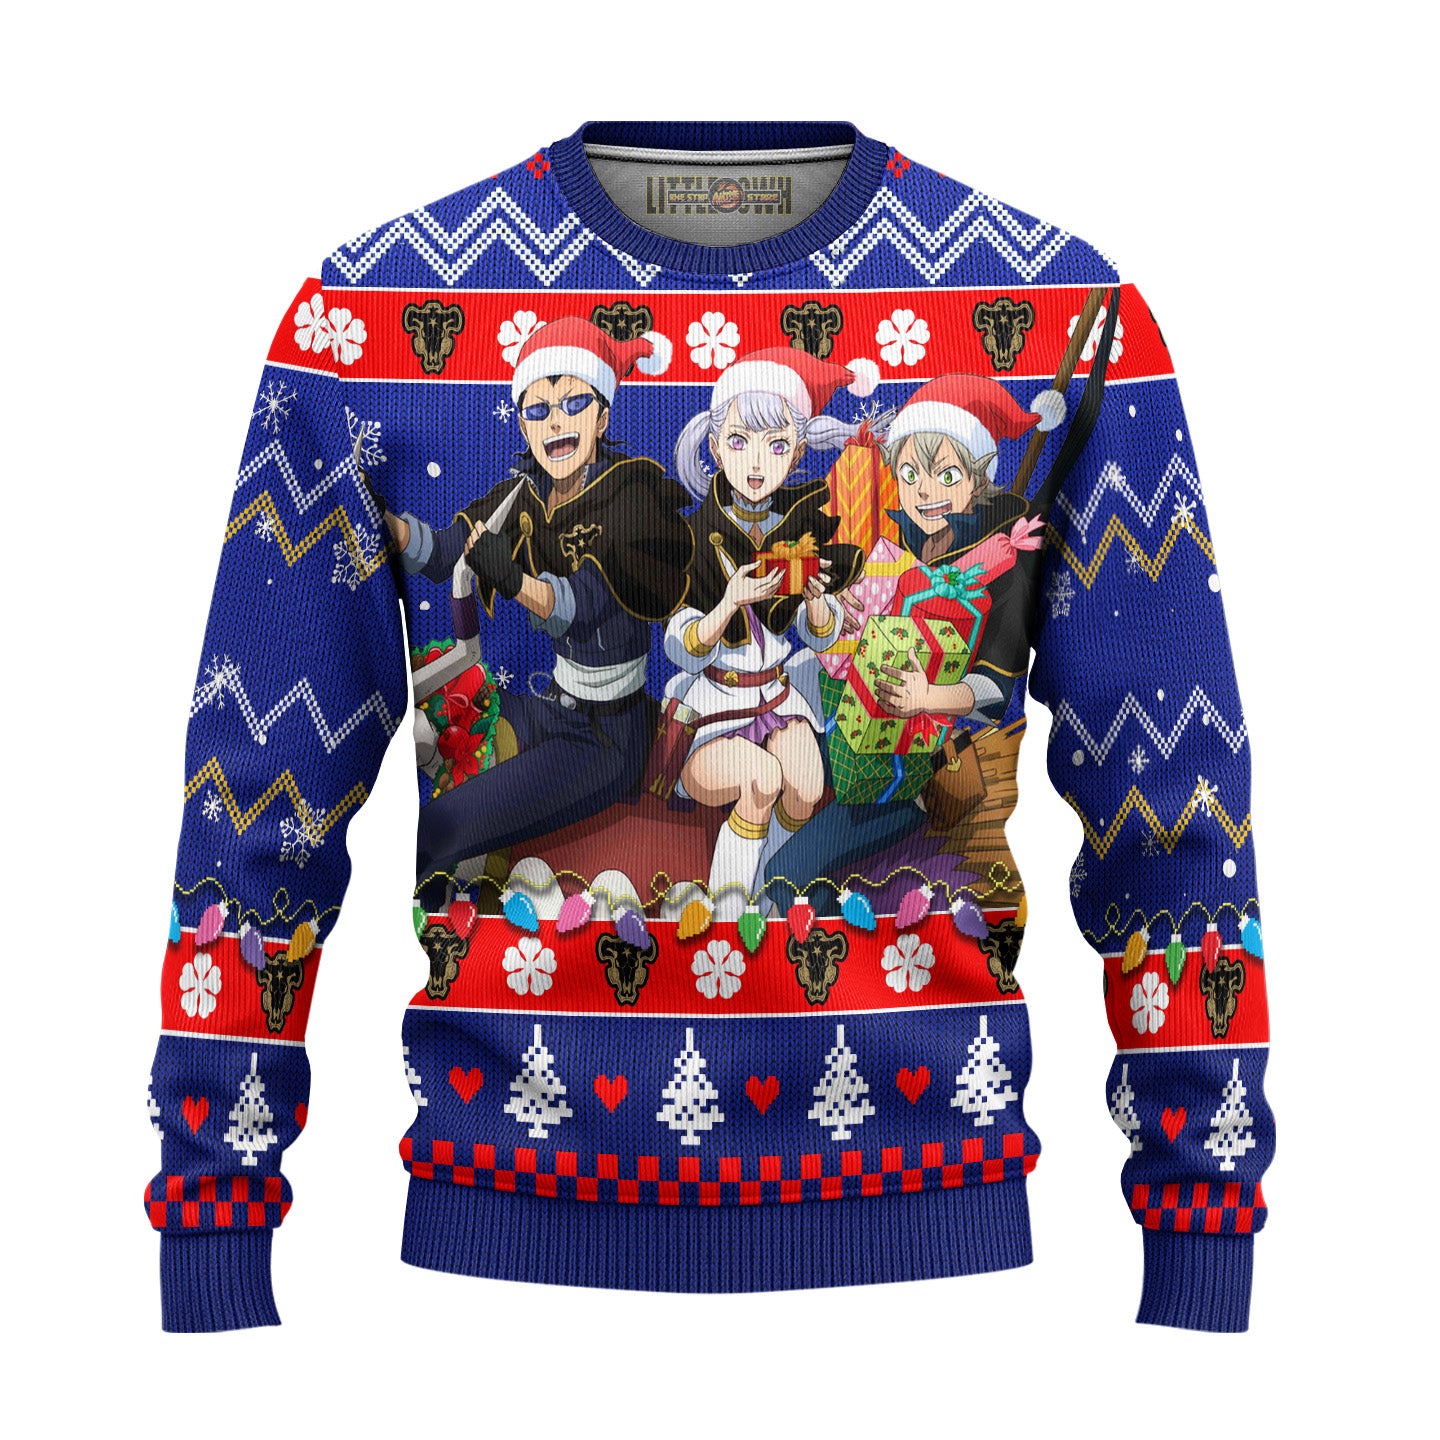 Black Clover Anime Ugly Christmas Sweater Purple New Design